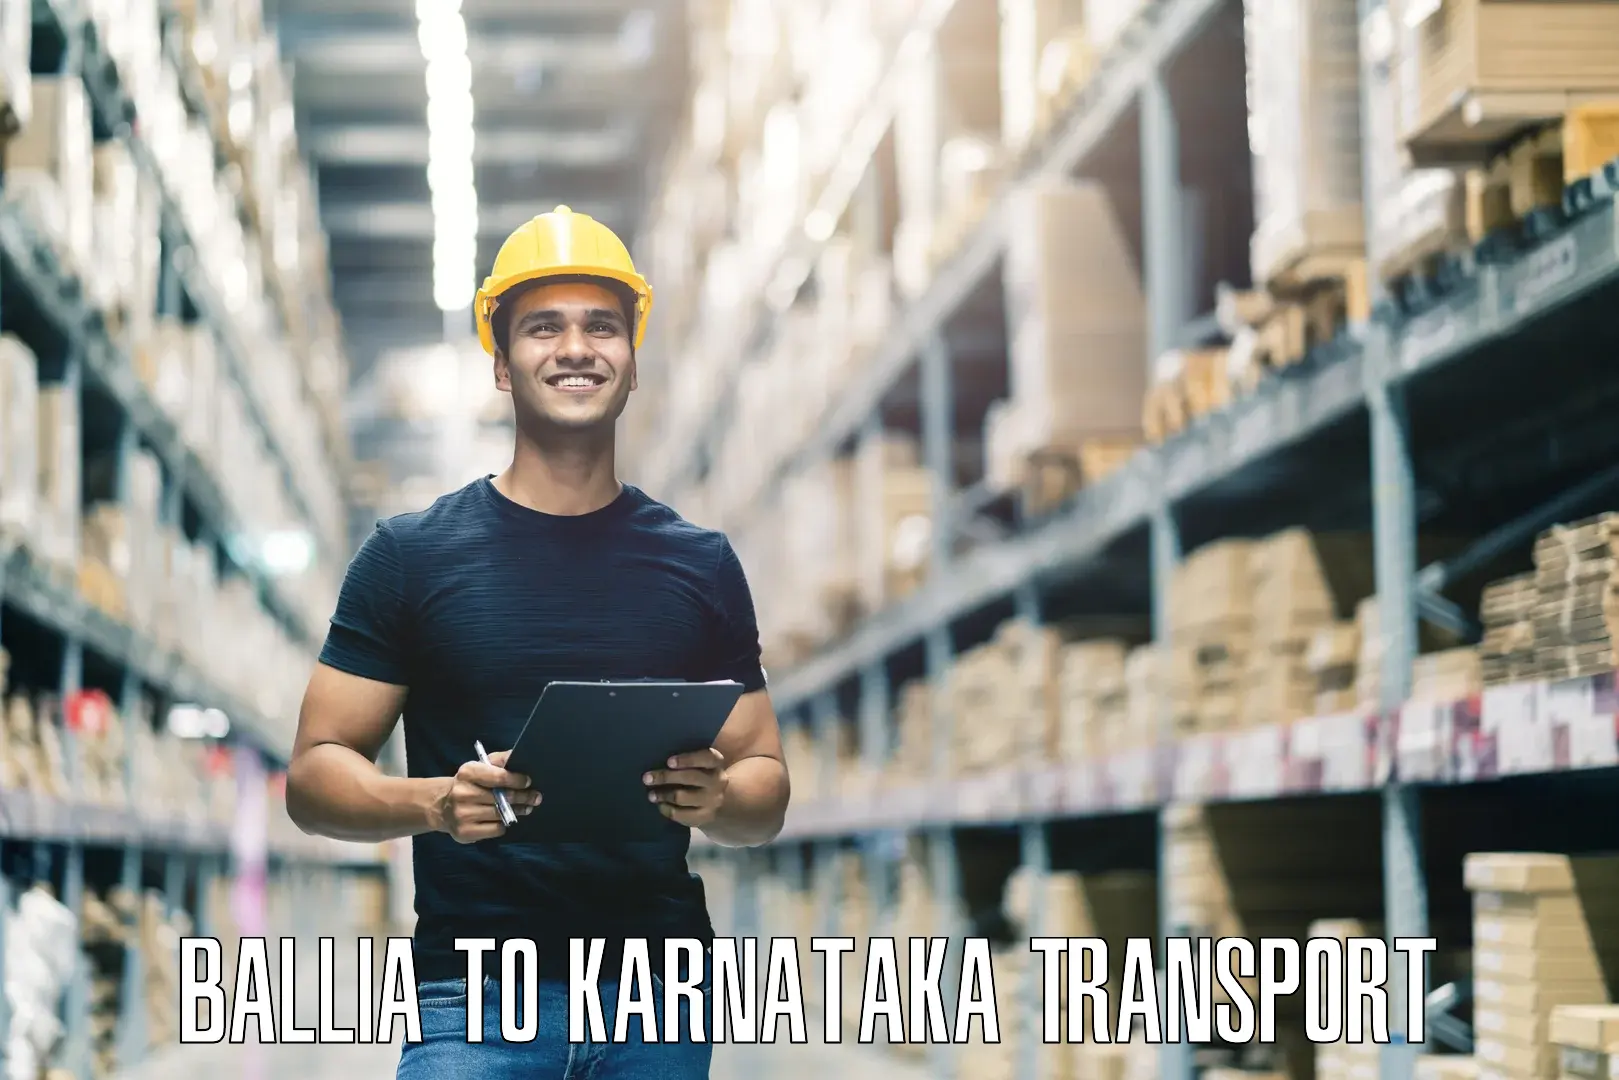 Pick up transport service Ballia to Karnataka